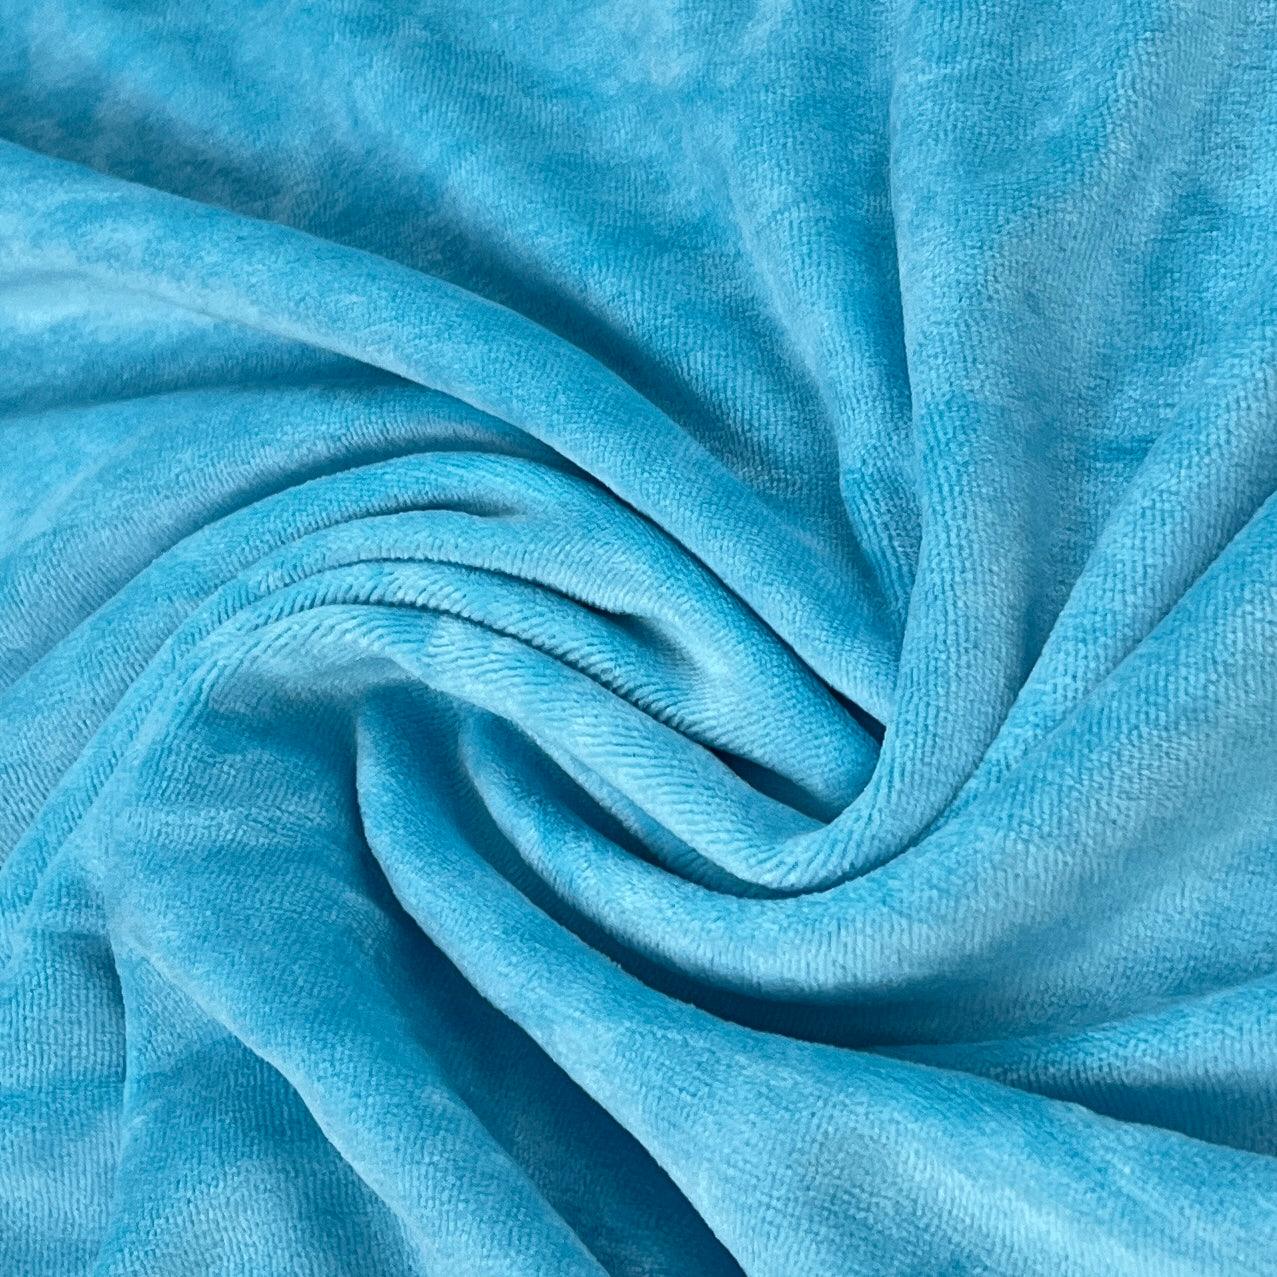 Blue Lagoon Bamboo Velour Fabric - 280 GSM, $11.91/yd, 15 Yards - Nature's Fabrics